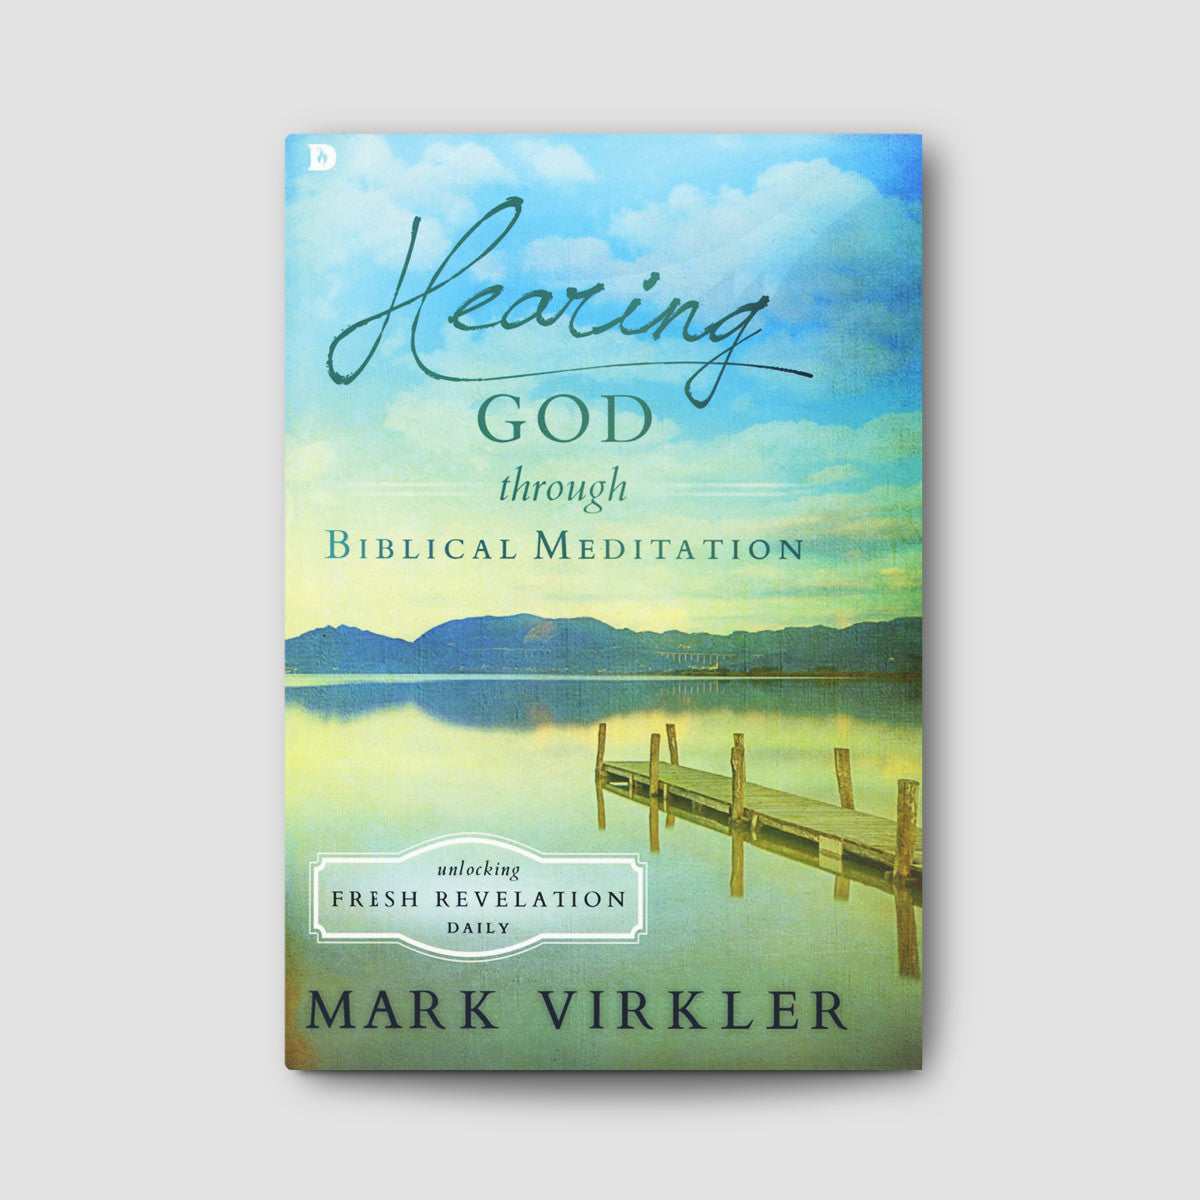 Hearing God through Biblical Meditation: Unlocking Fresh Revelation Daily